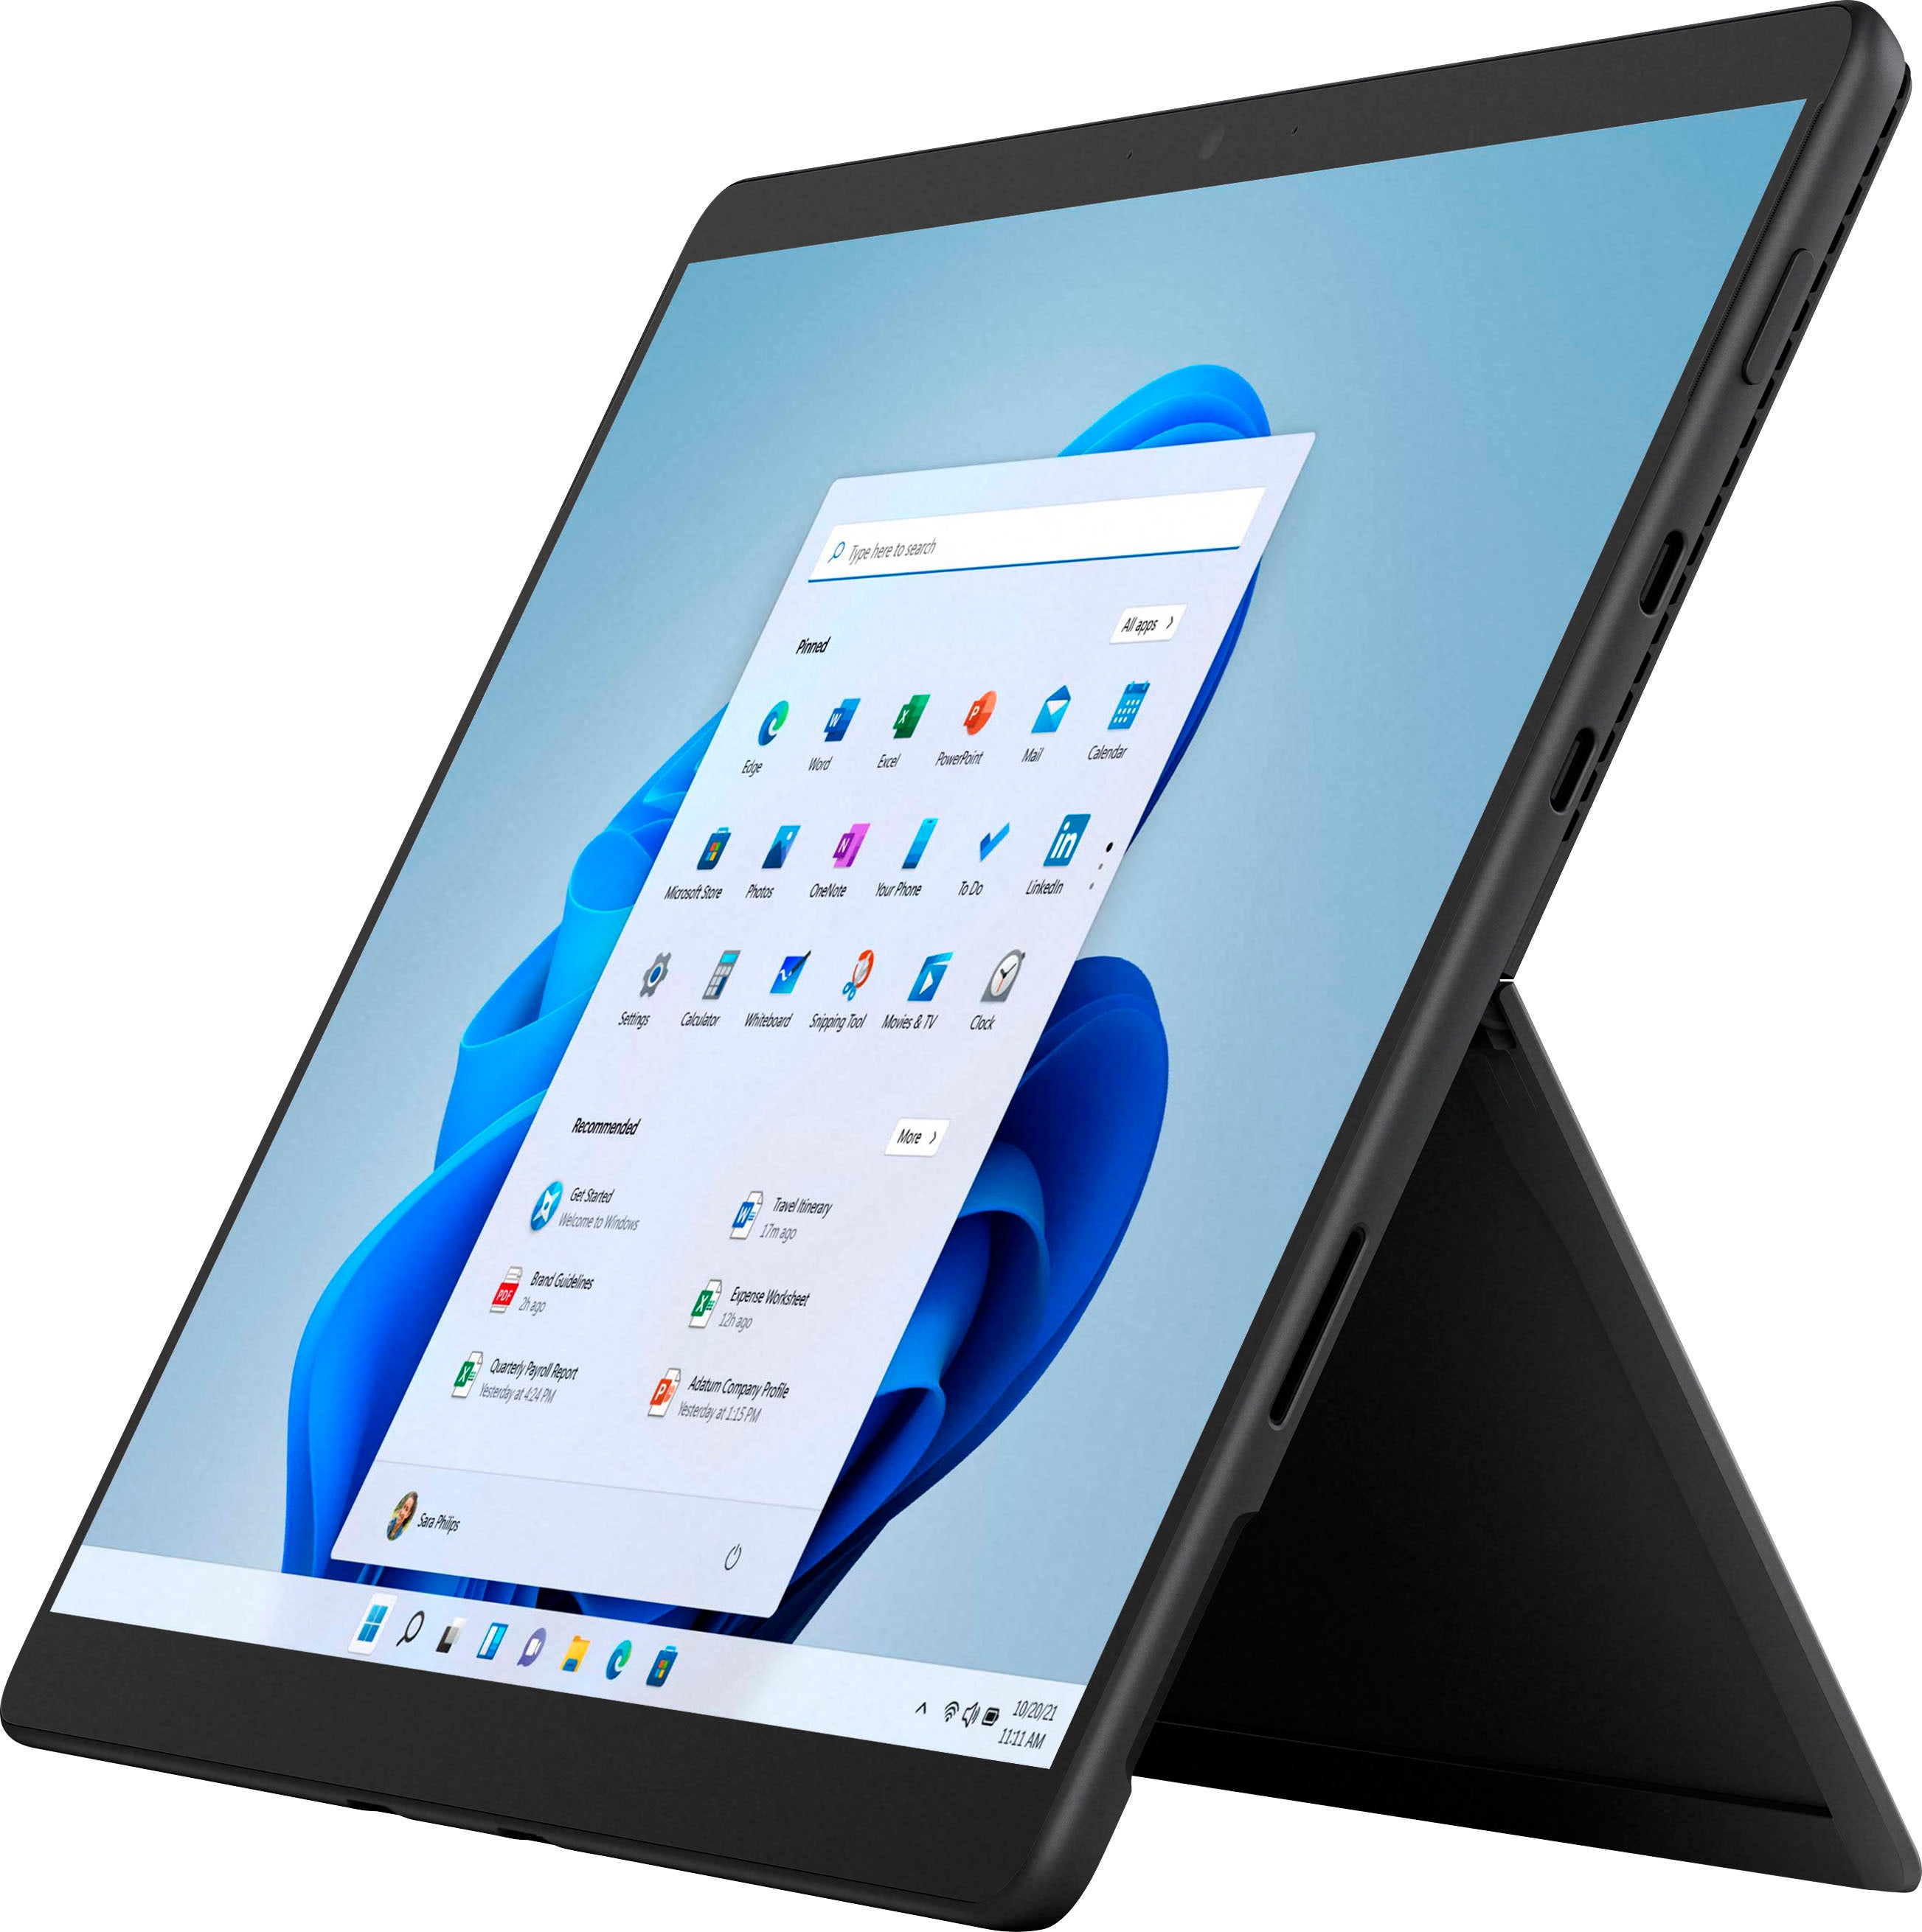 Best Windows tablets - updated August 2022